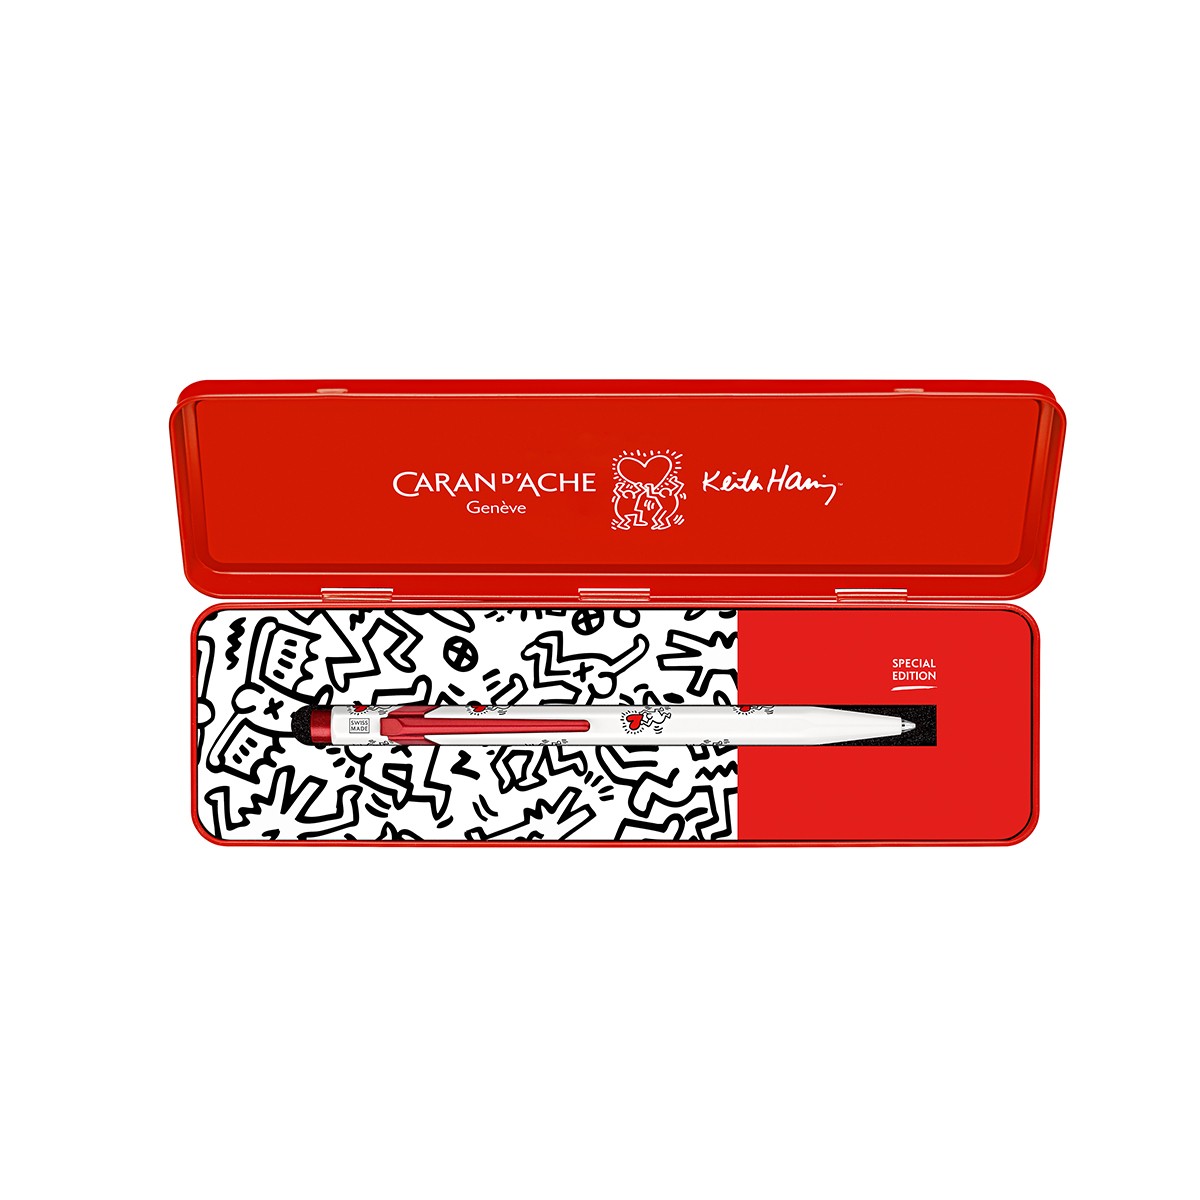 CARAN D'ACHE x Keith Haring Στυλό Διαρκείας 849 Λευκό - Special Edition